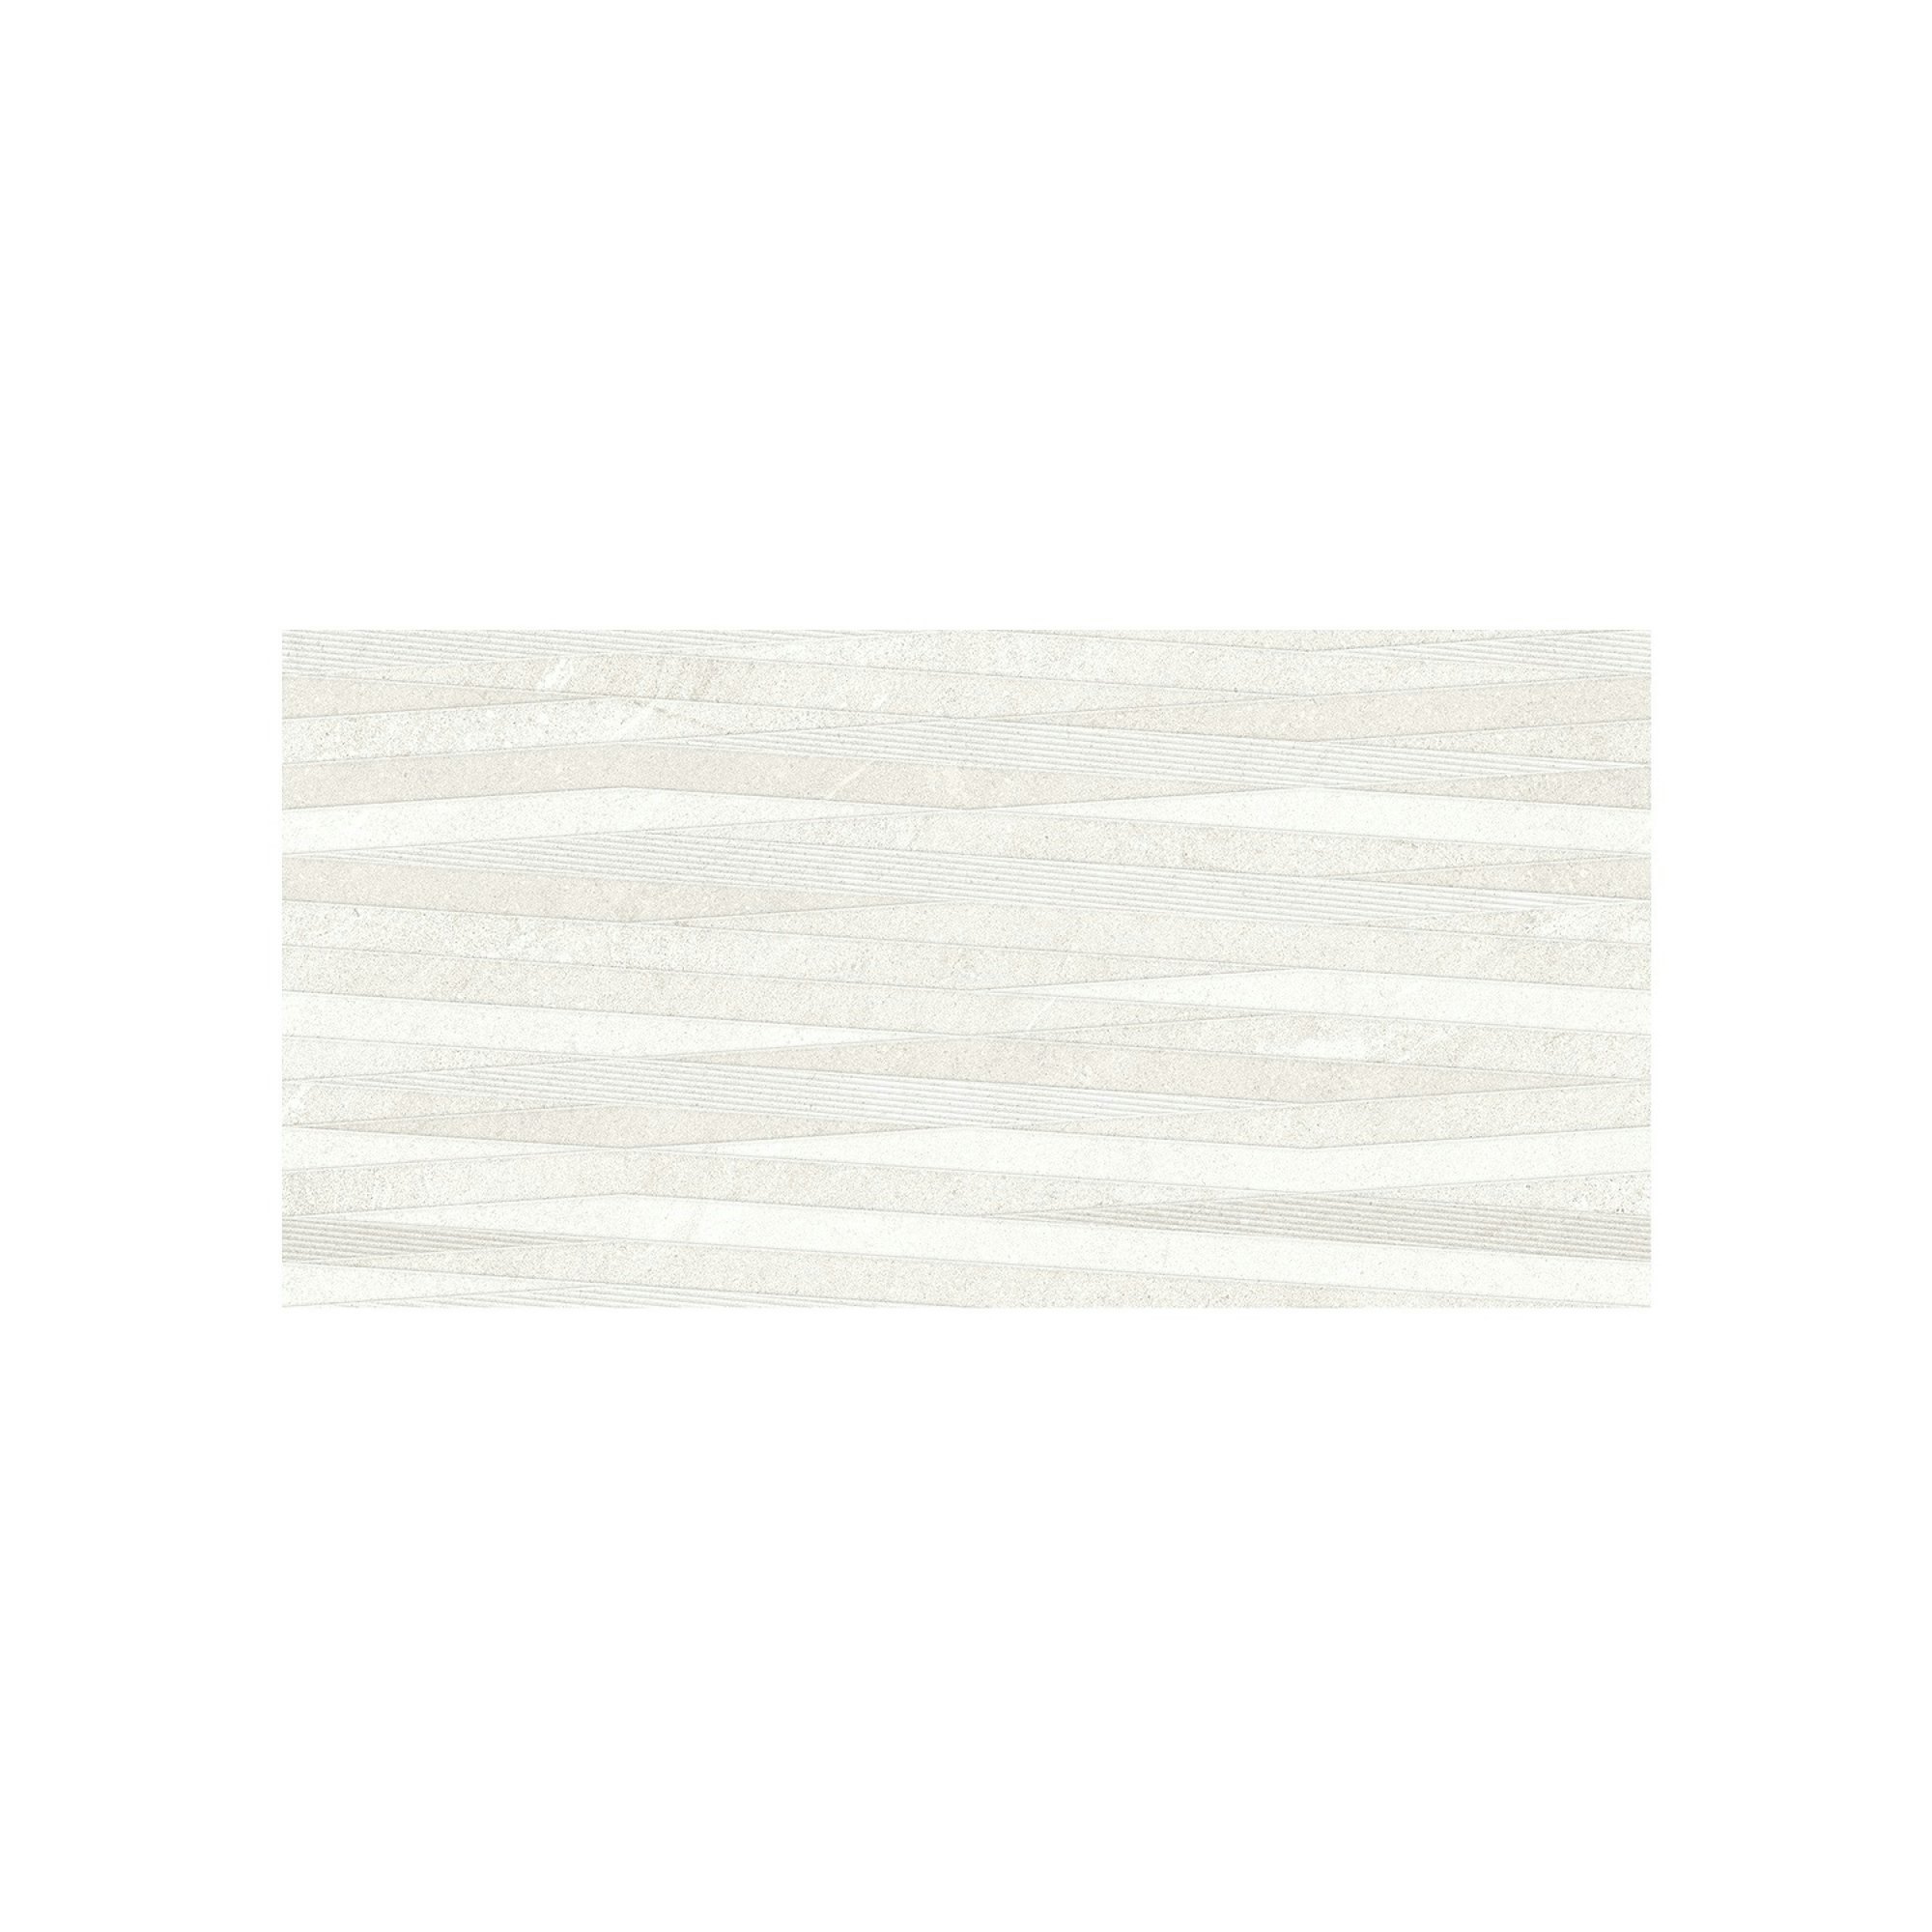 Tourmalet White Gloss Decor Wall Tile